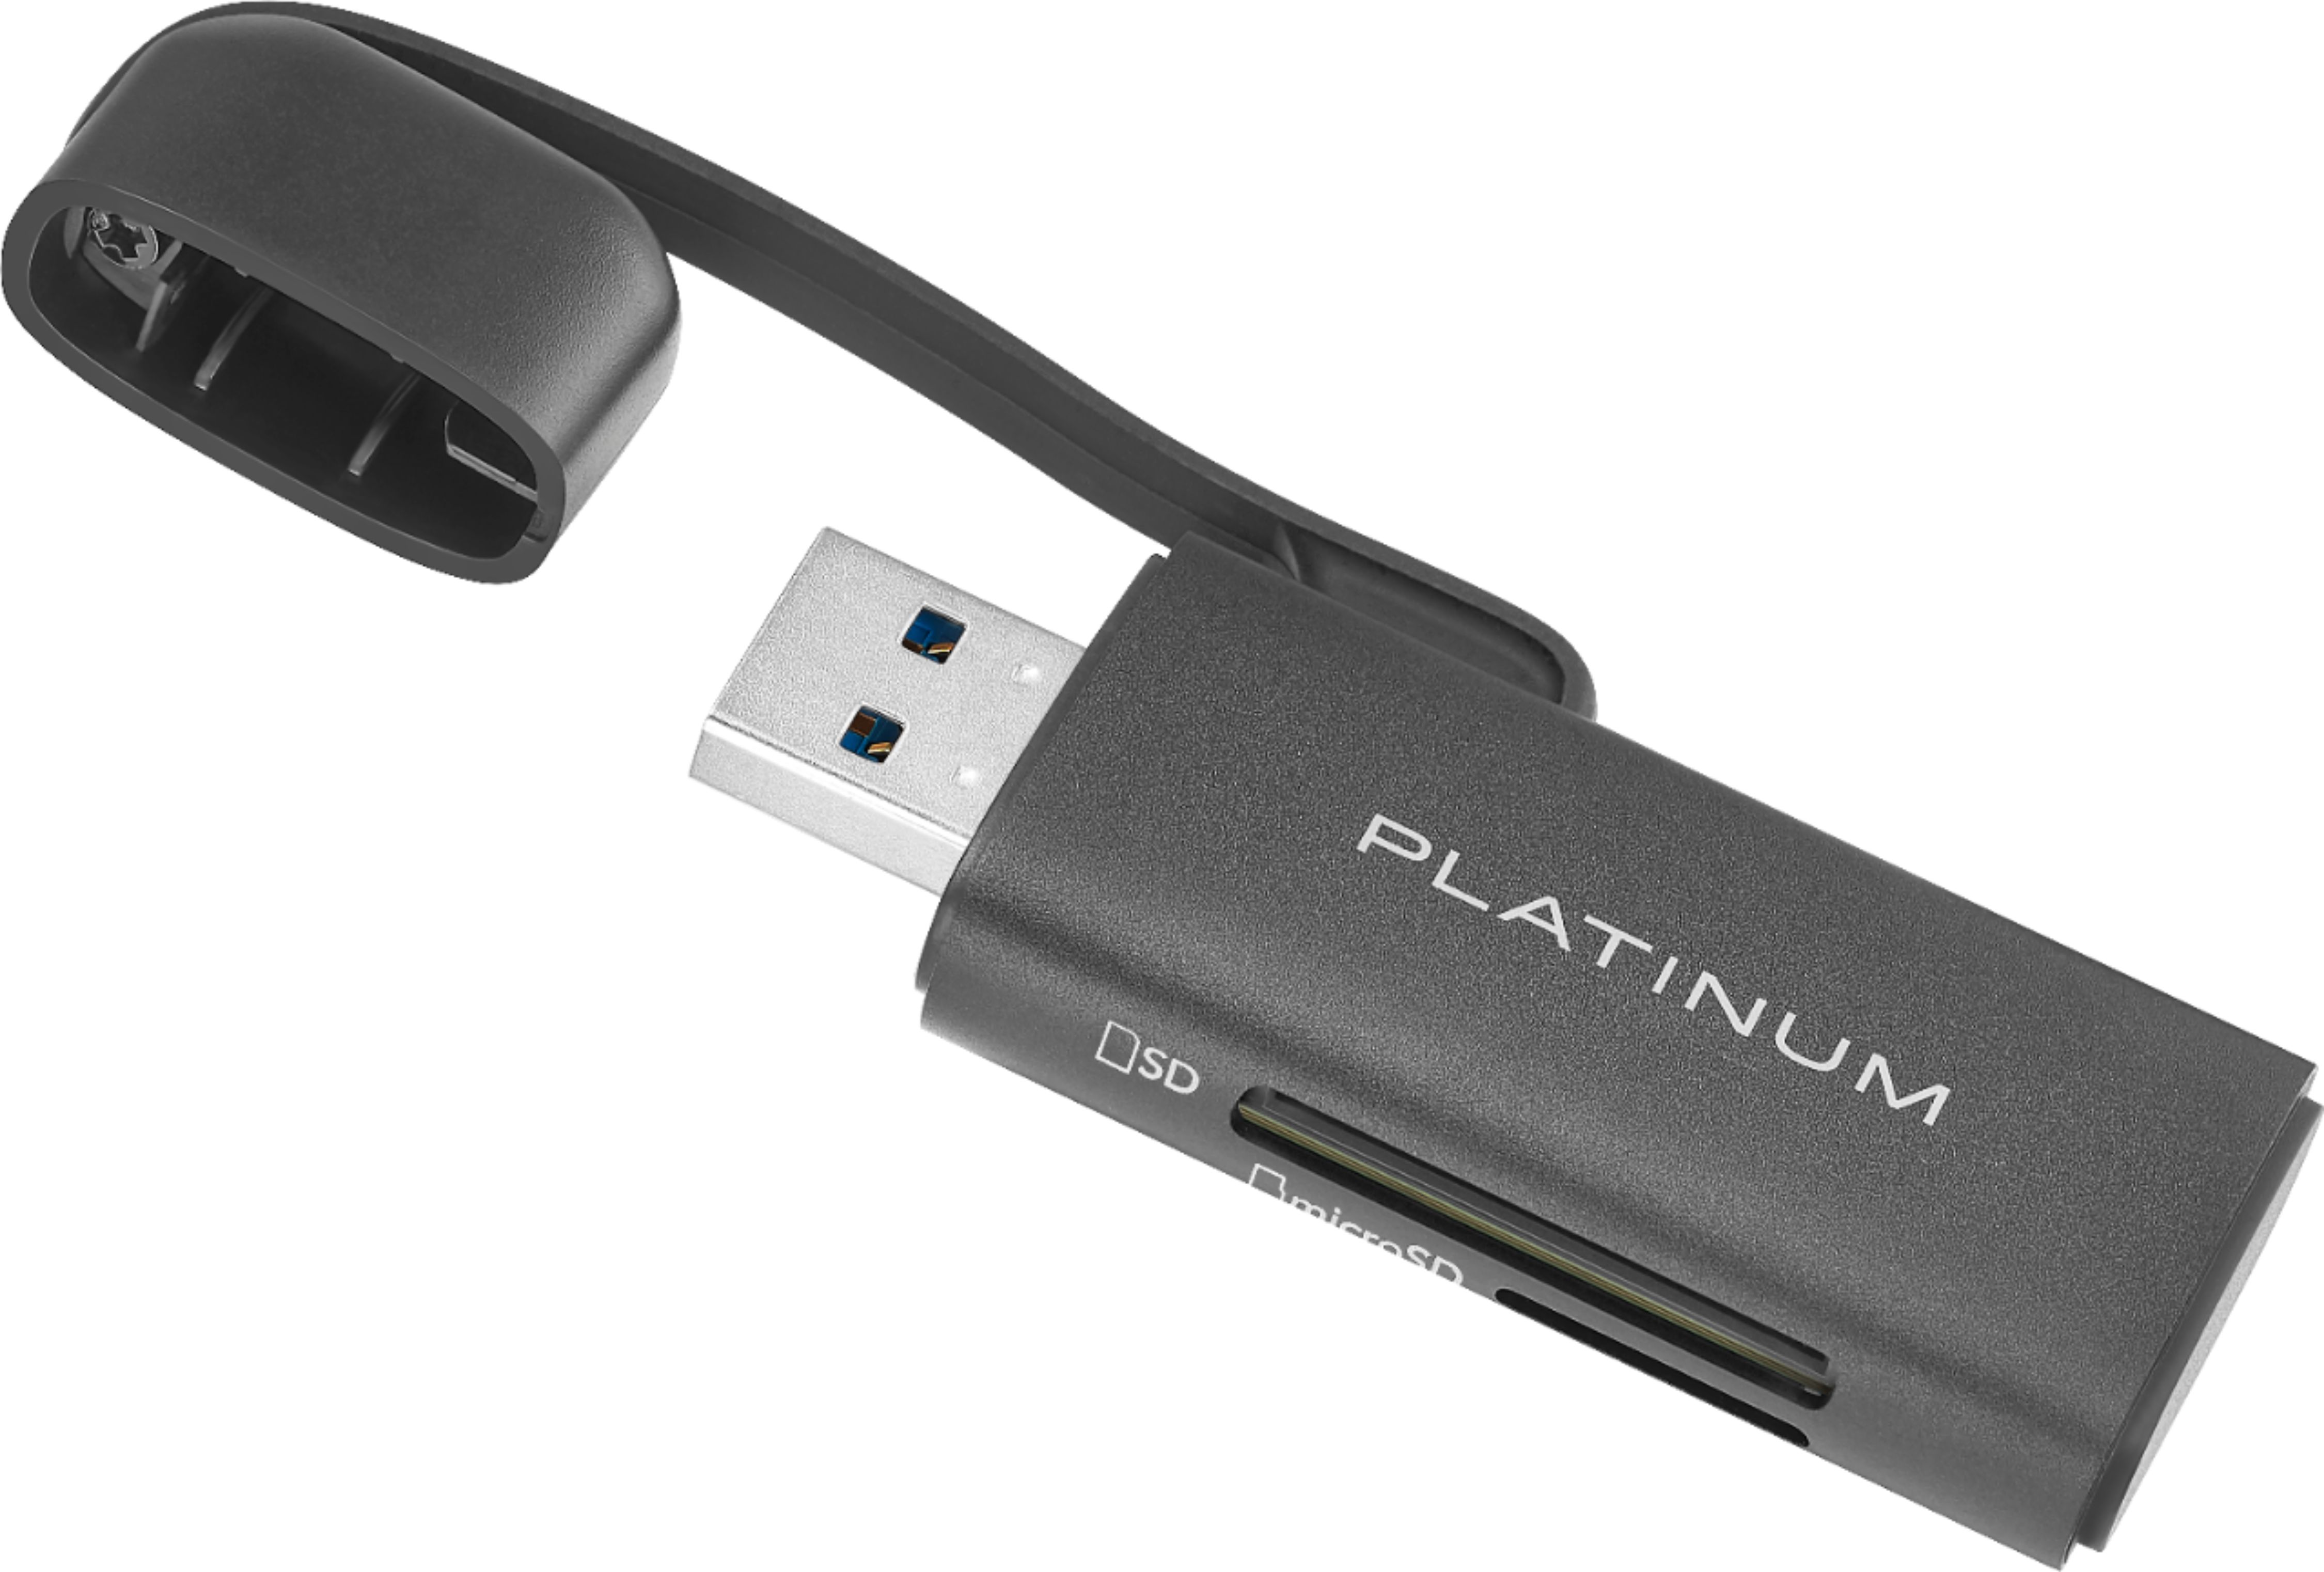 Platinum UHS-I USB 3.2 Gen 1 Memory Card Reader